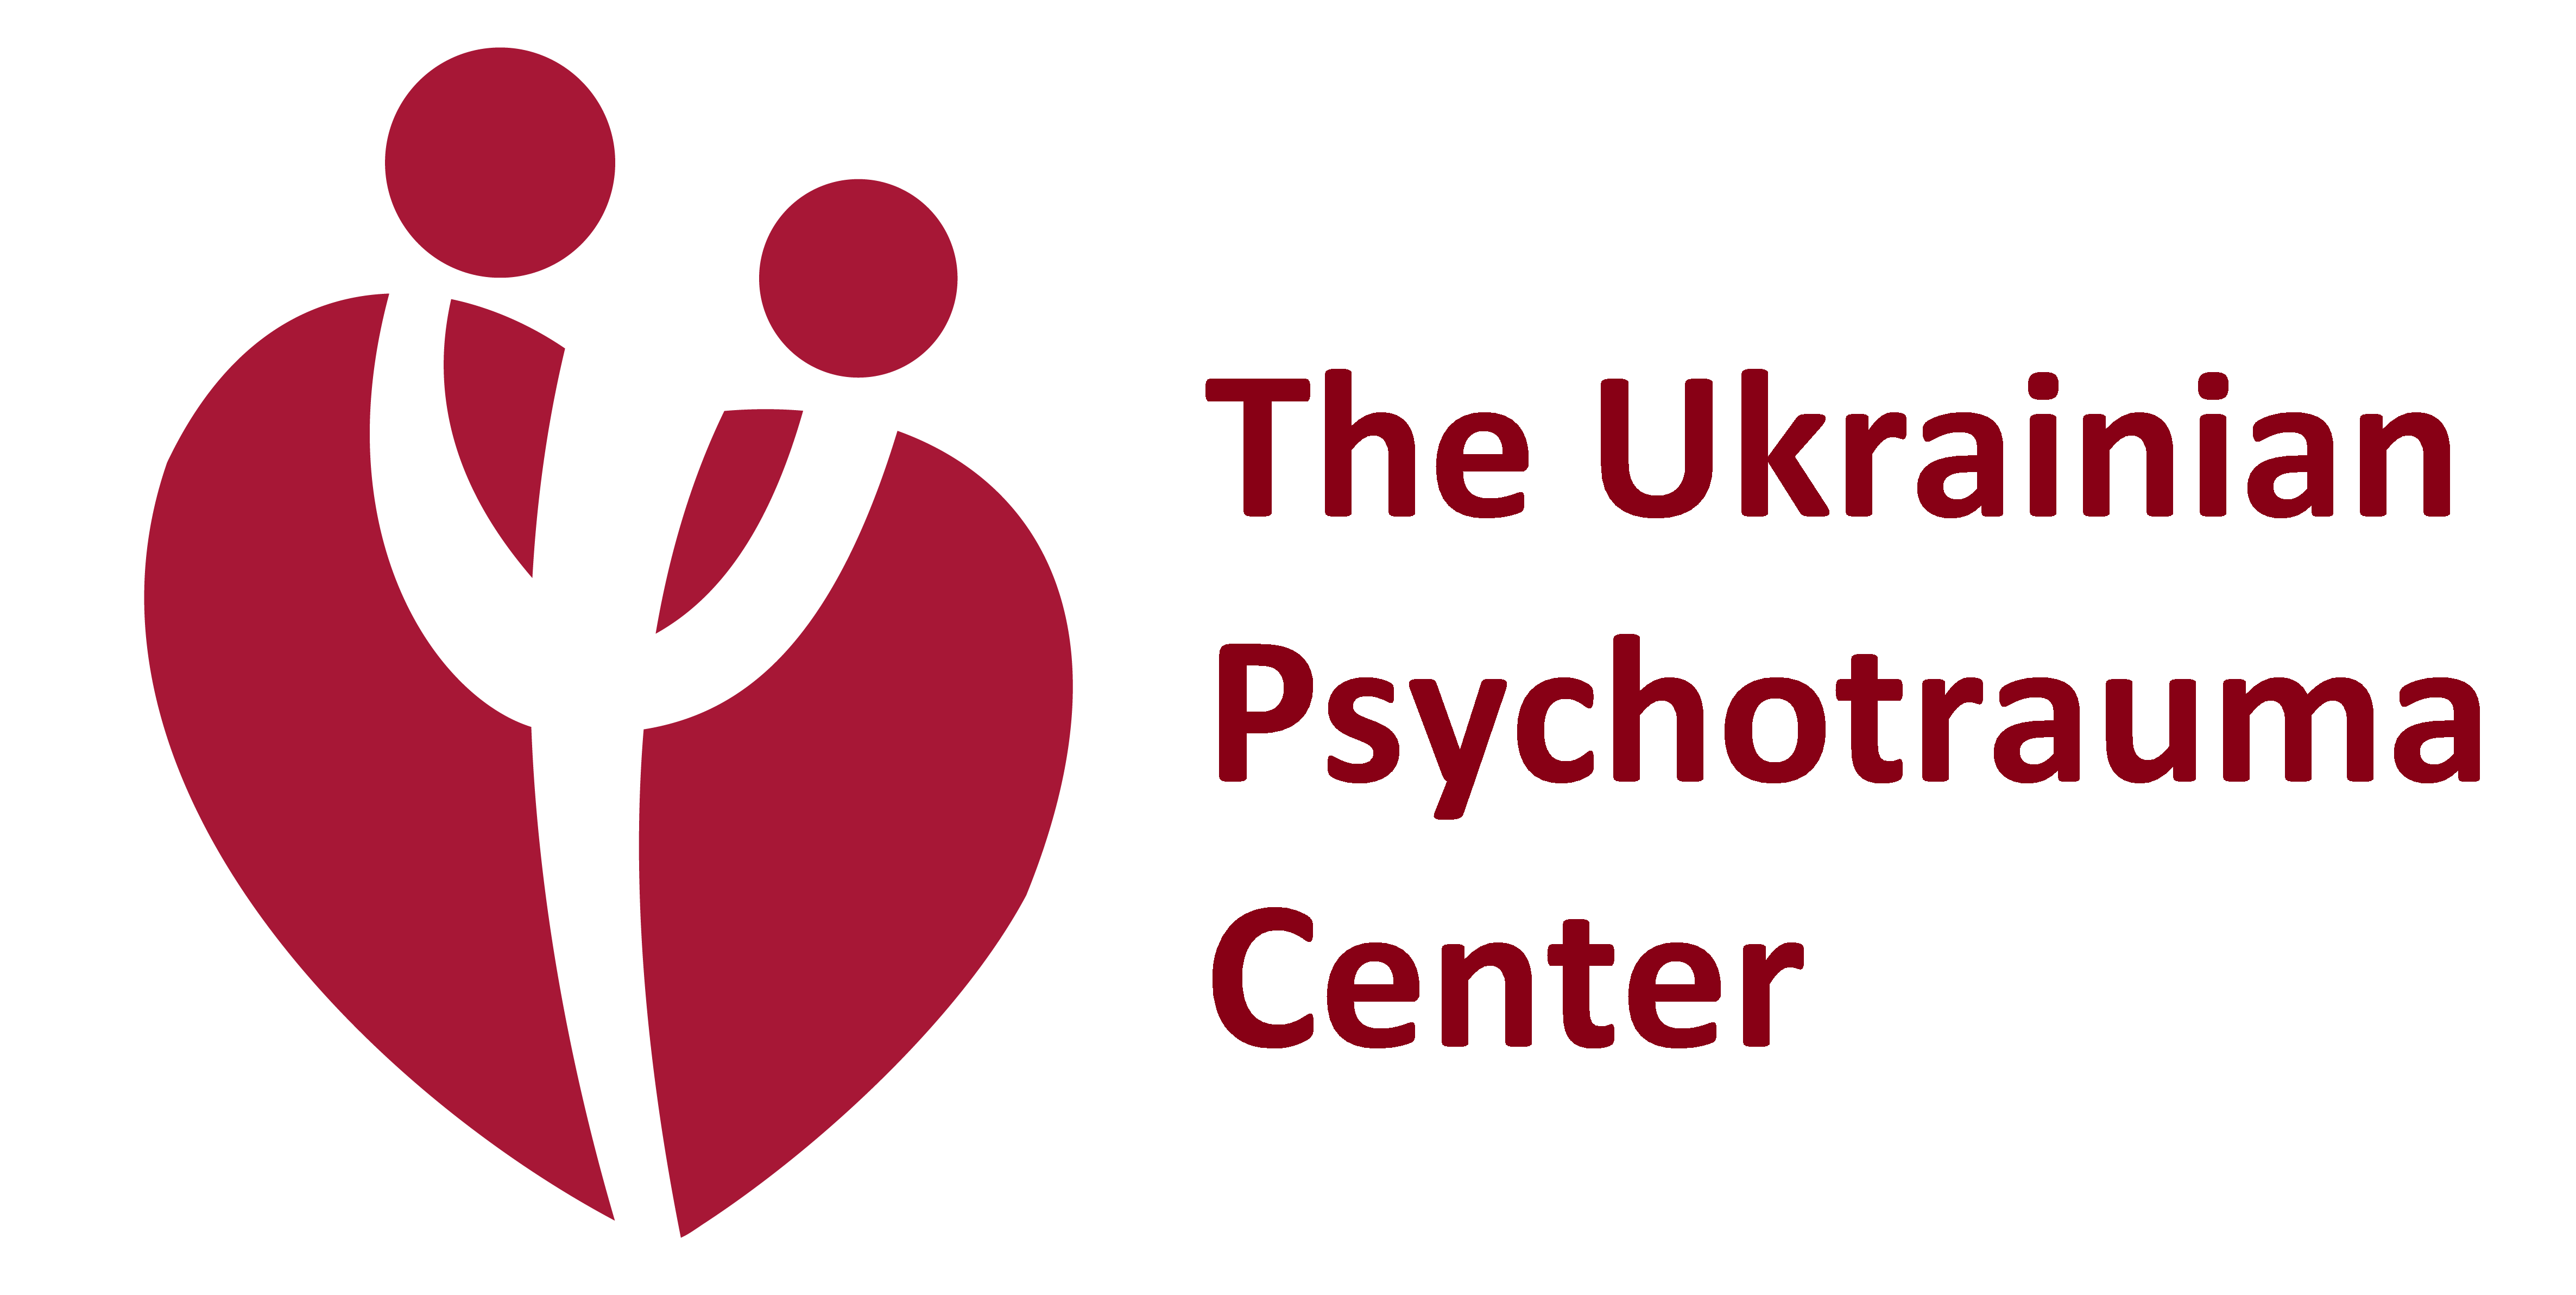 THE UKRAINIAN PSYCHOTRAUMA CENTER